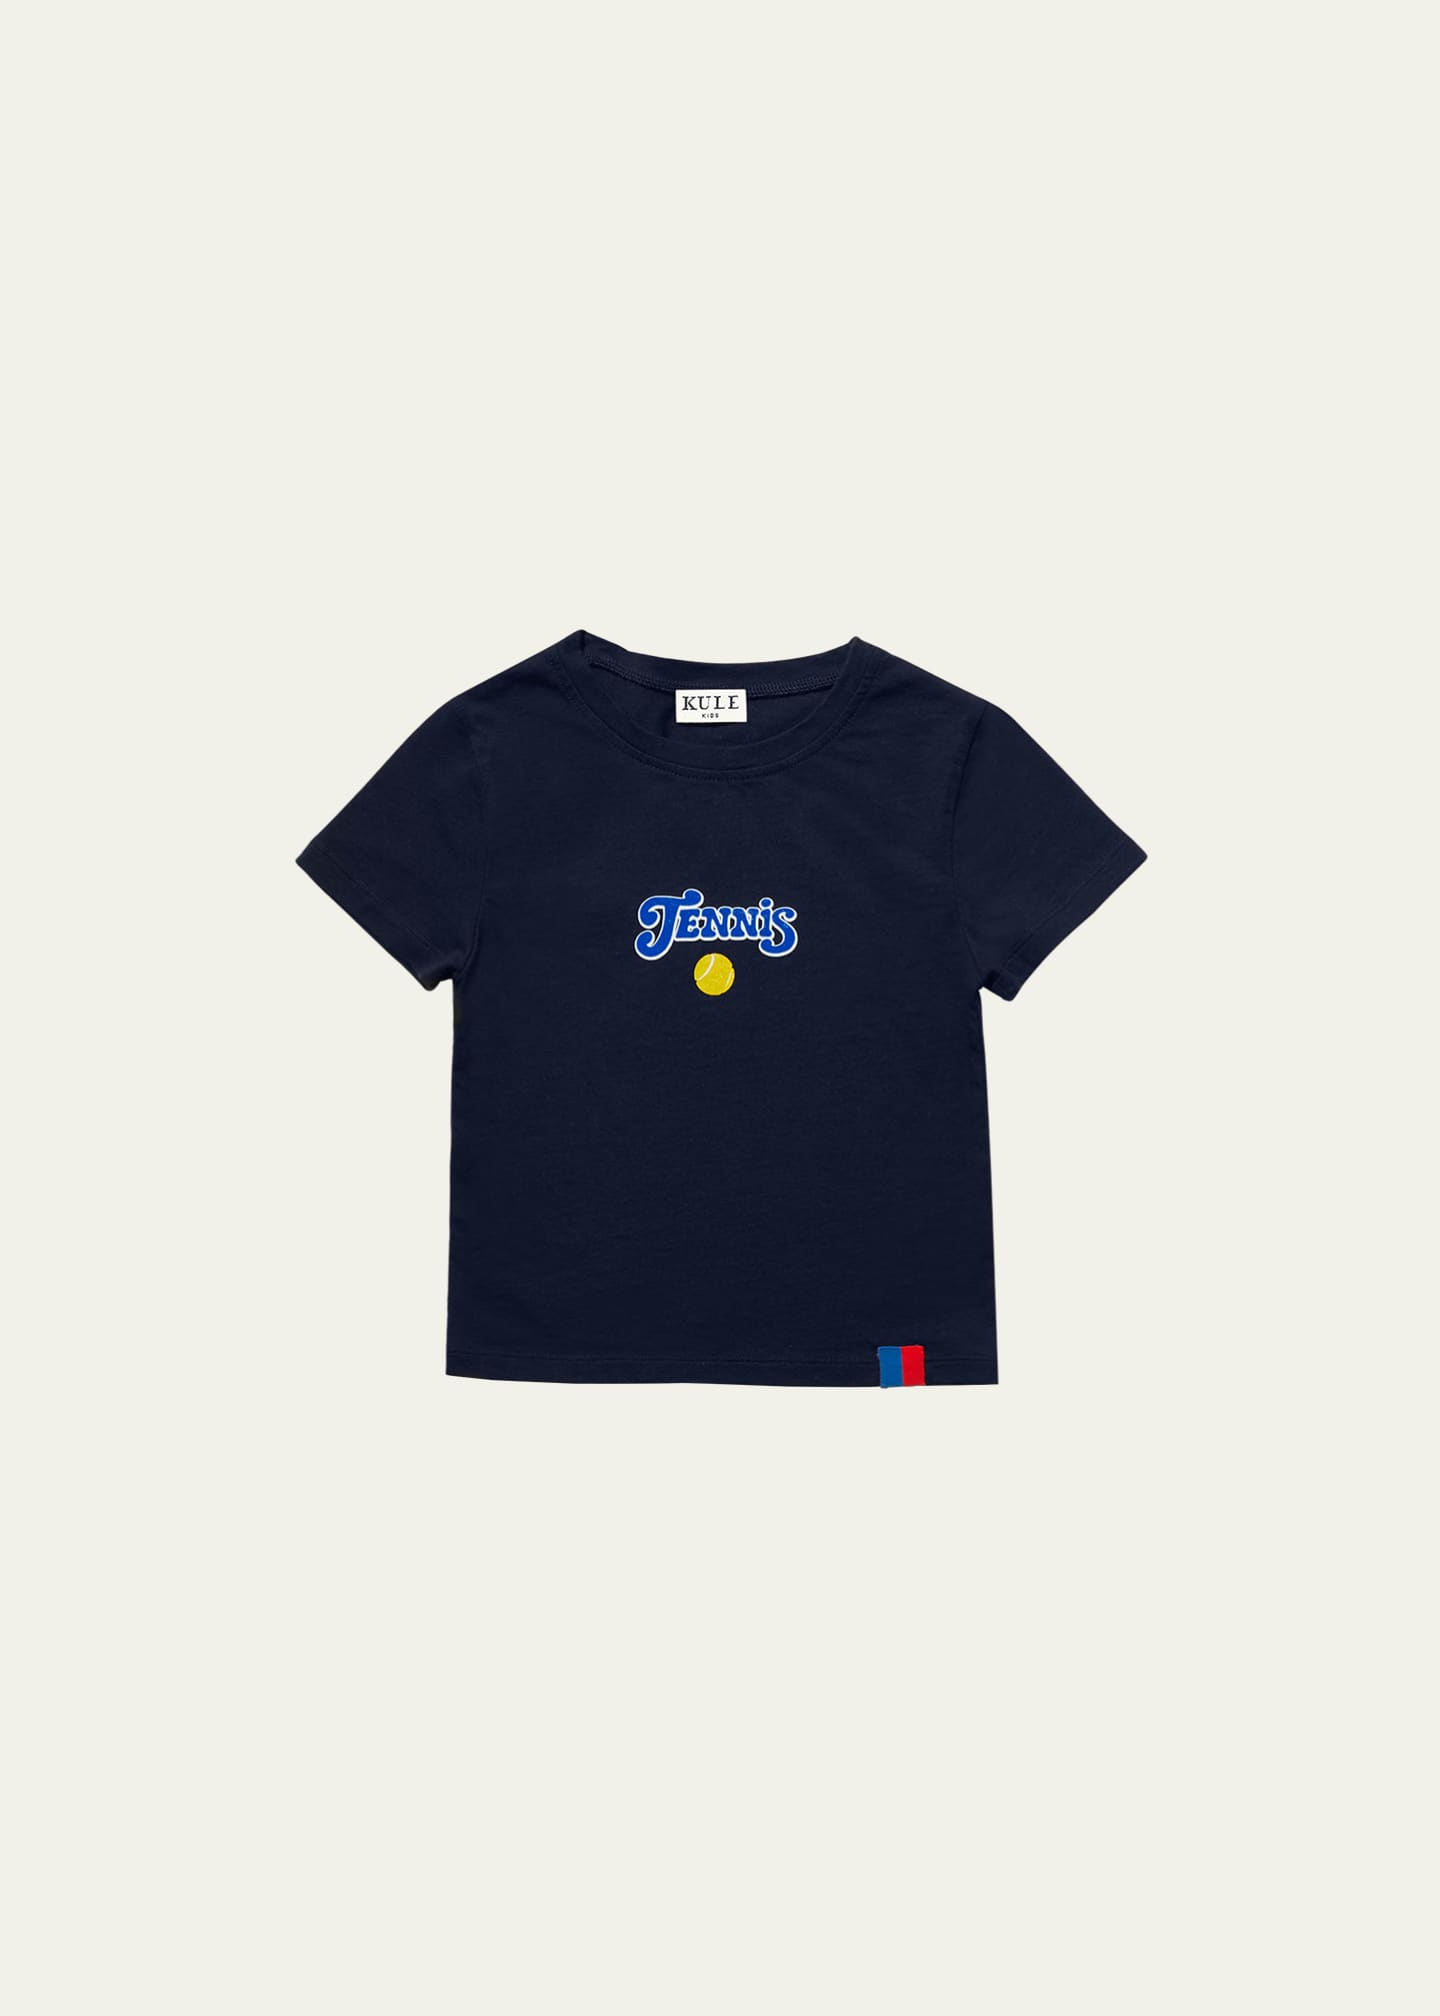 Kule Kid's Charley Tennis Graphic T-Shirt, Size 2-8 - Bergdorf Goodman